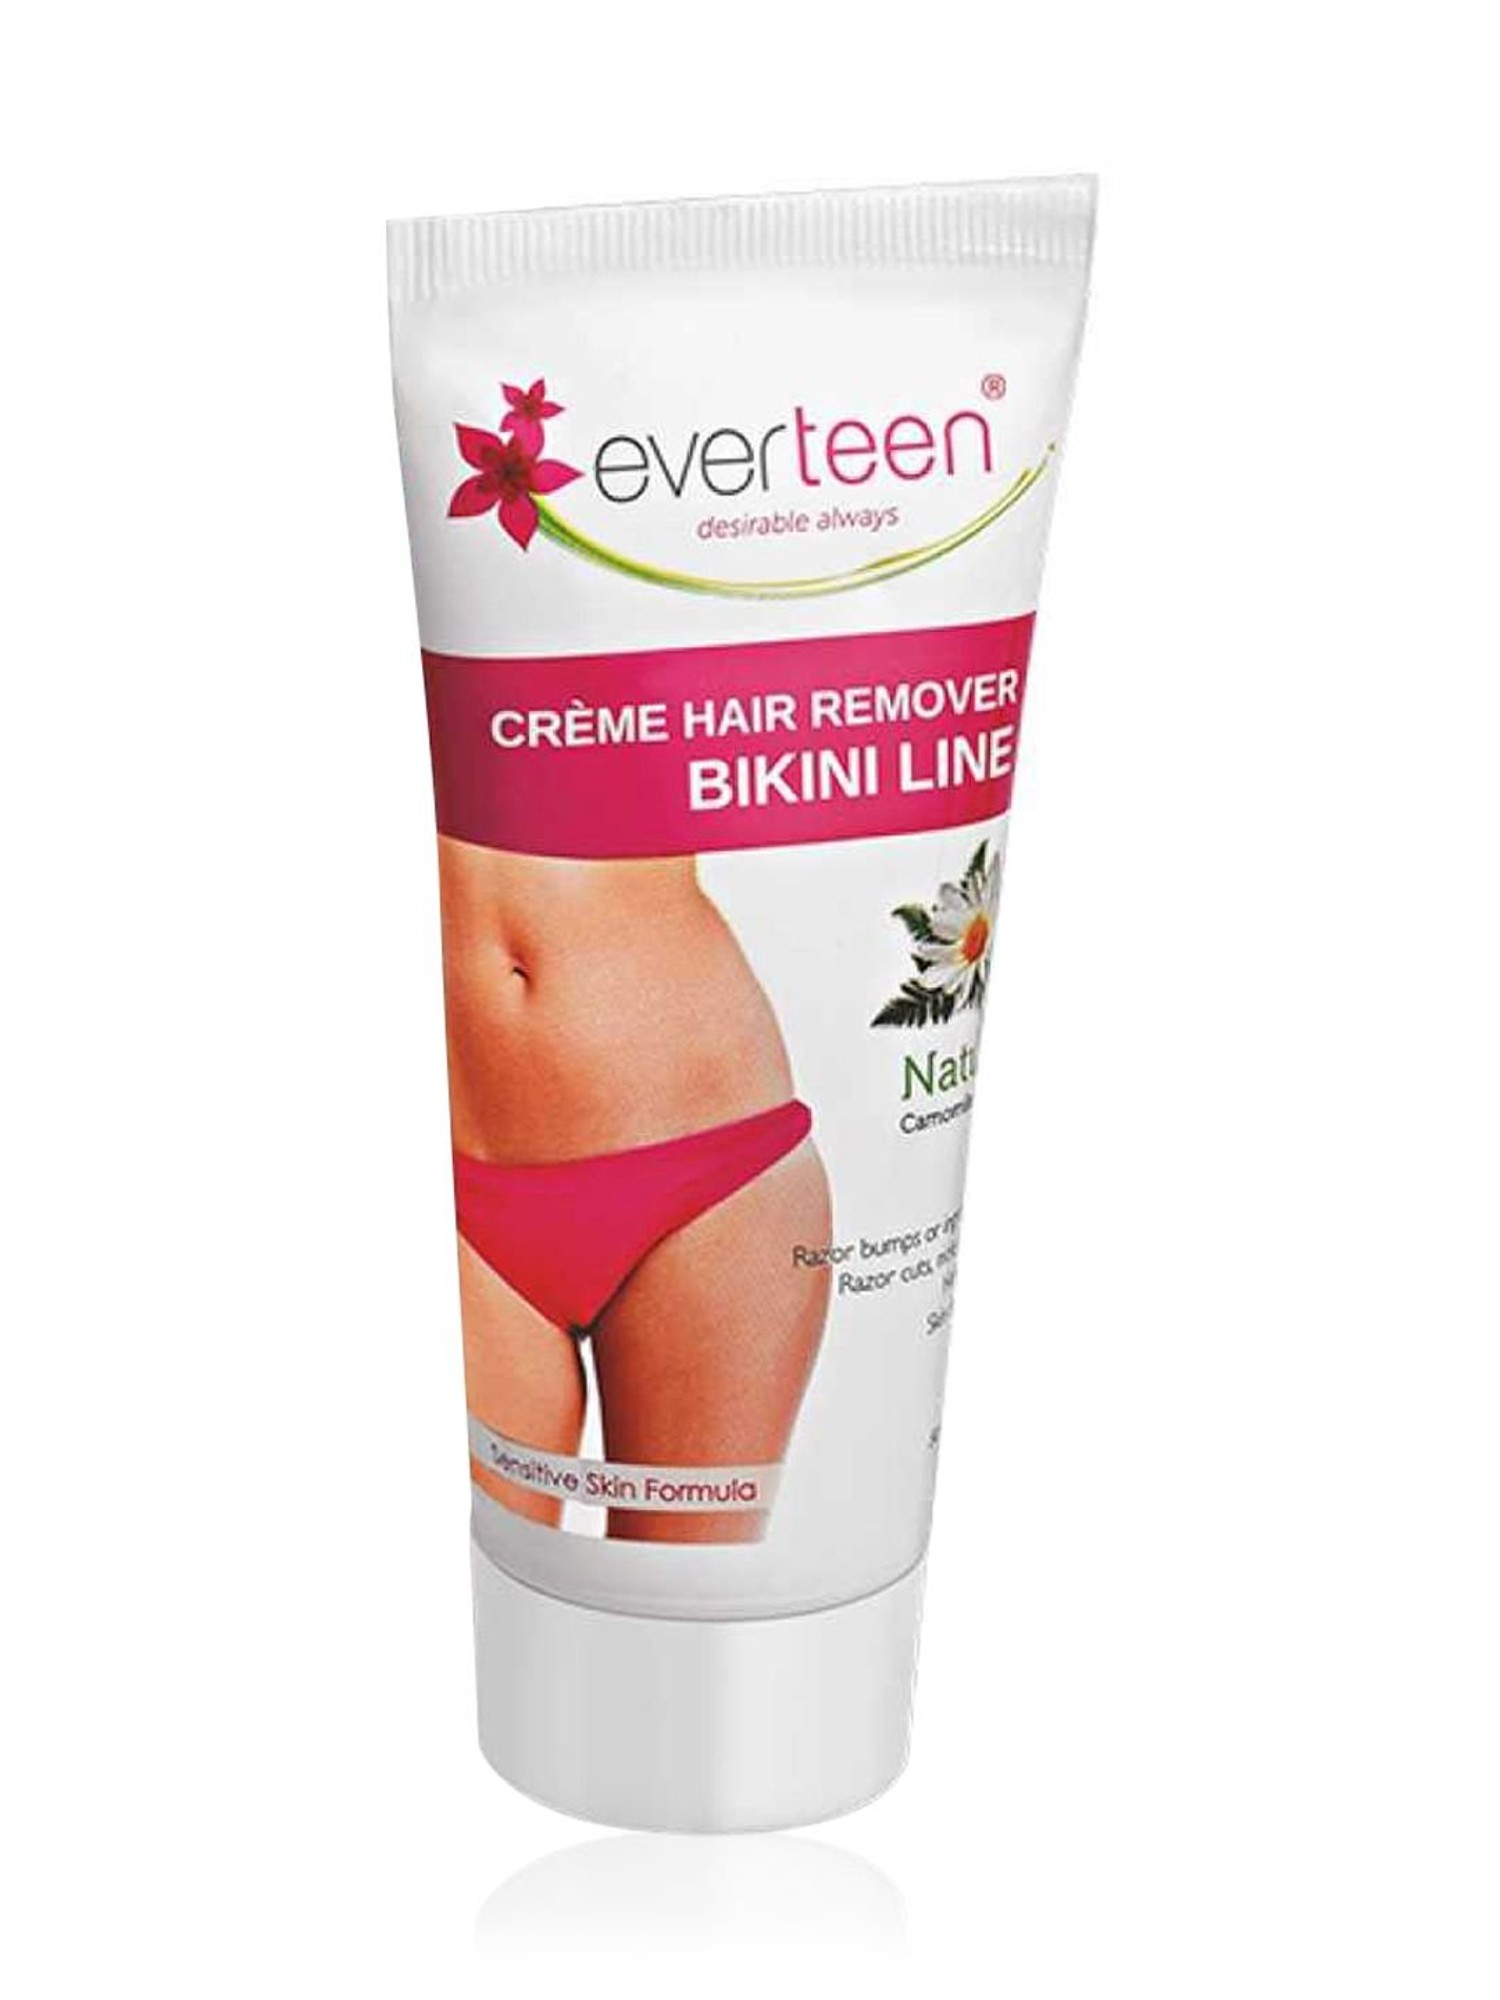 Everteen Bikini Line Hair Removal Cream Review  Price Ingredients